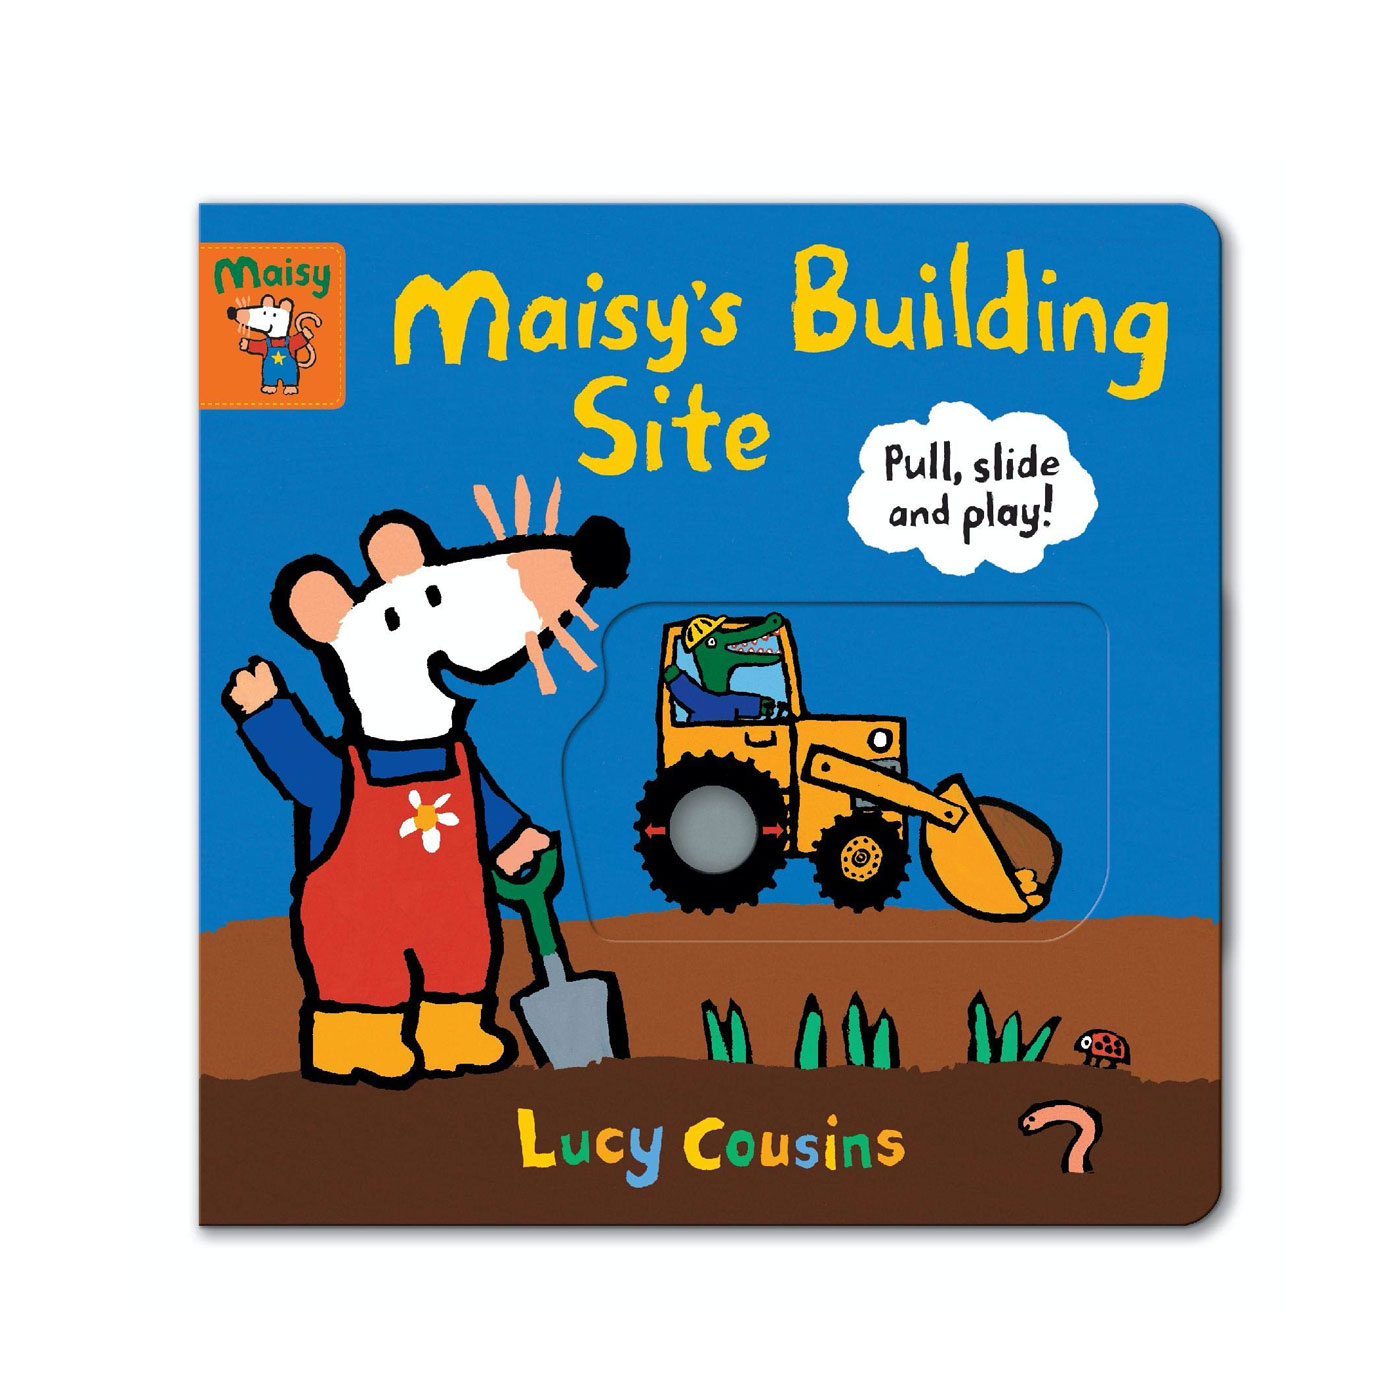  Maisy's Building Site